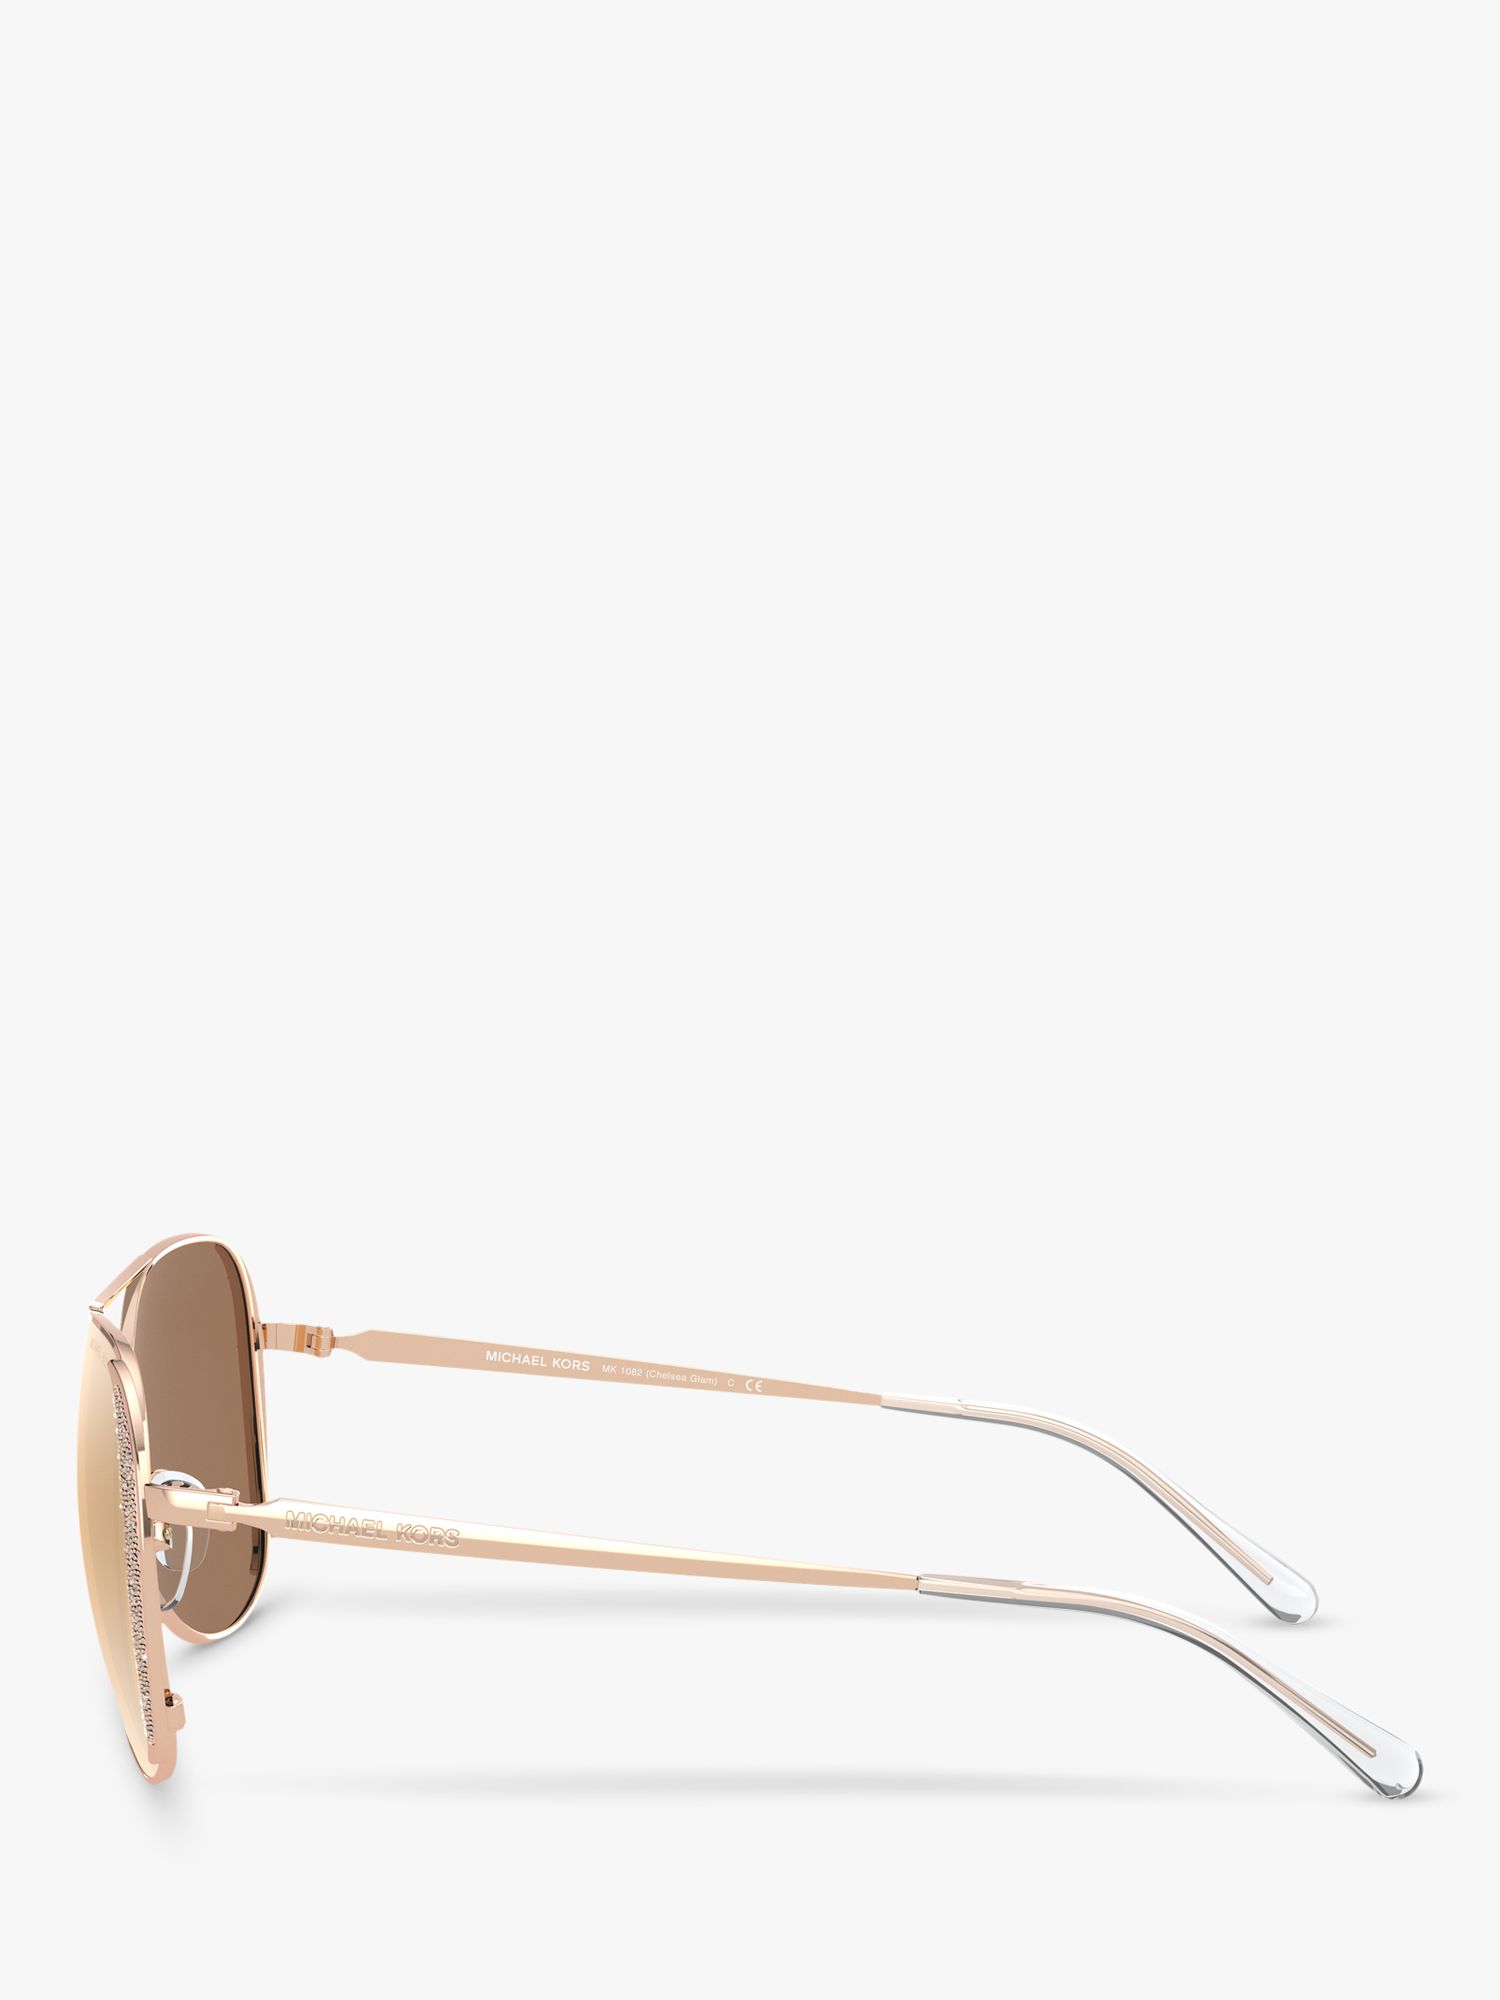 Michael Kors Chelsea Glam Sunglasses